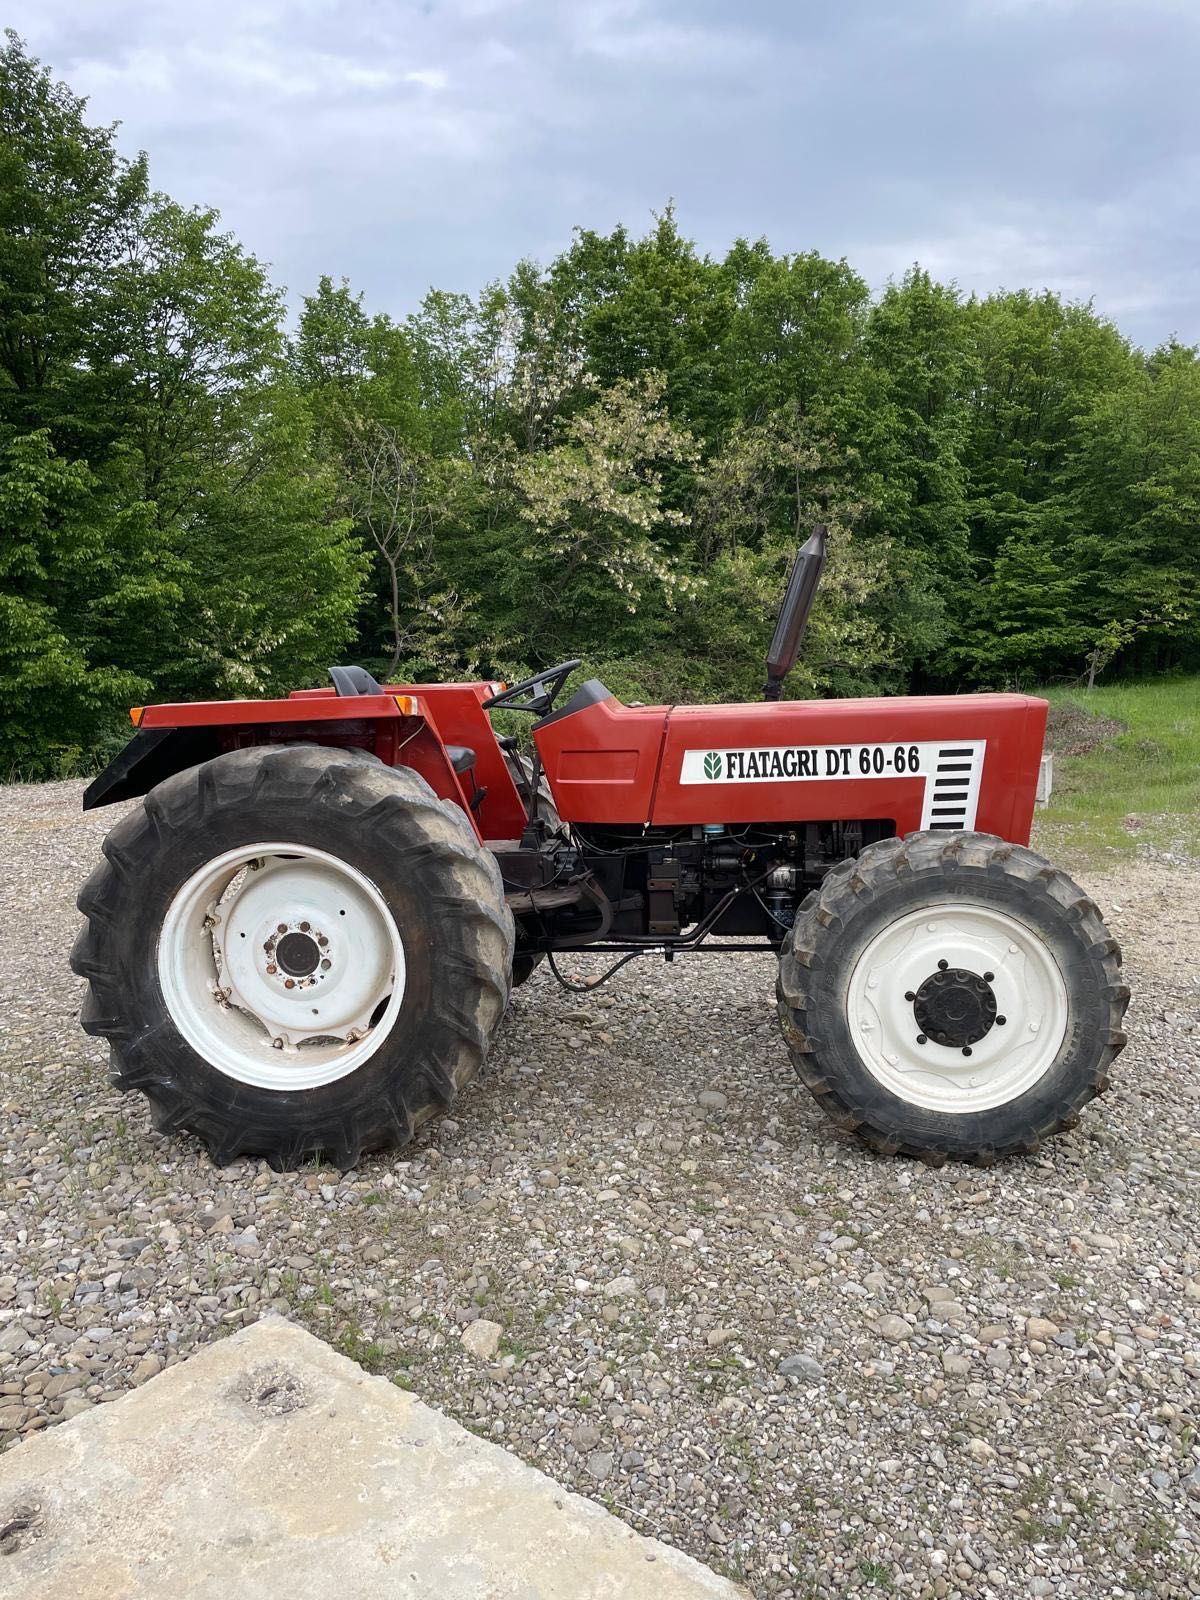 Tractor Fiat agri 60-66